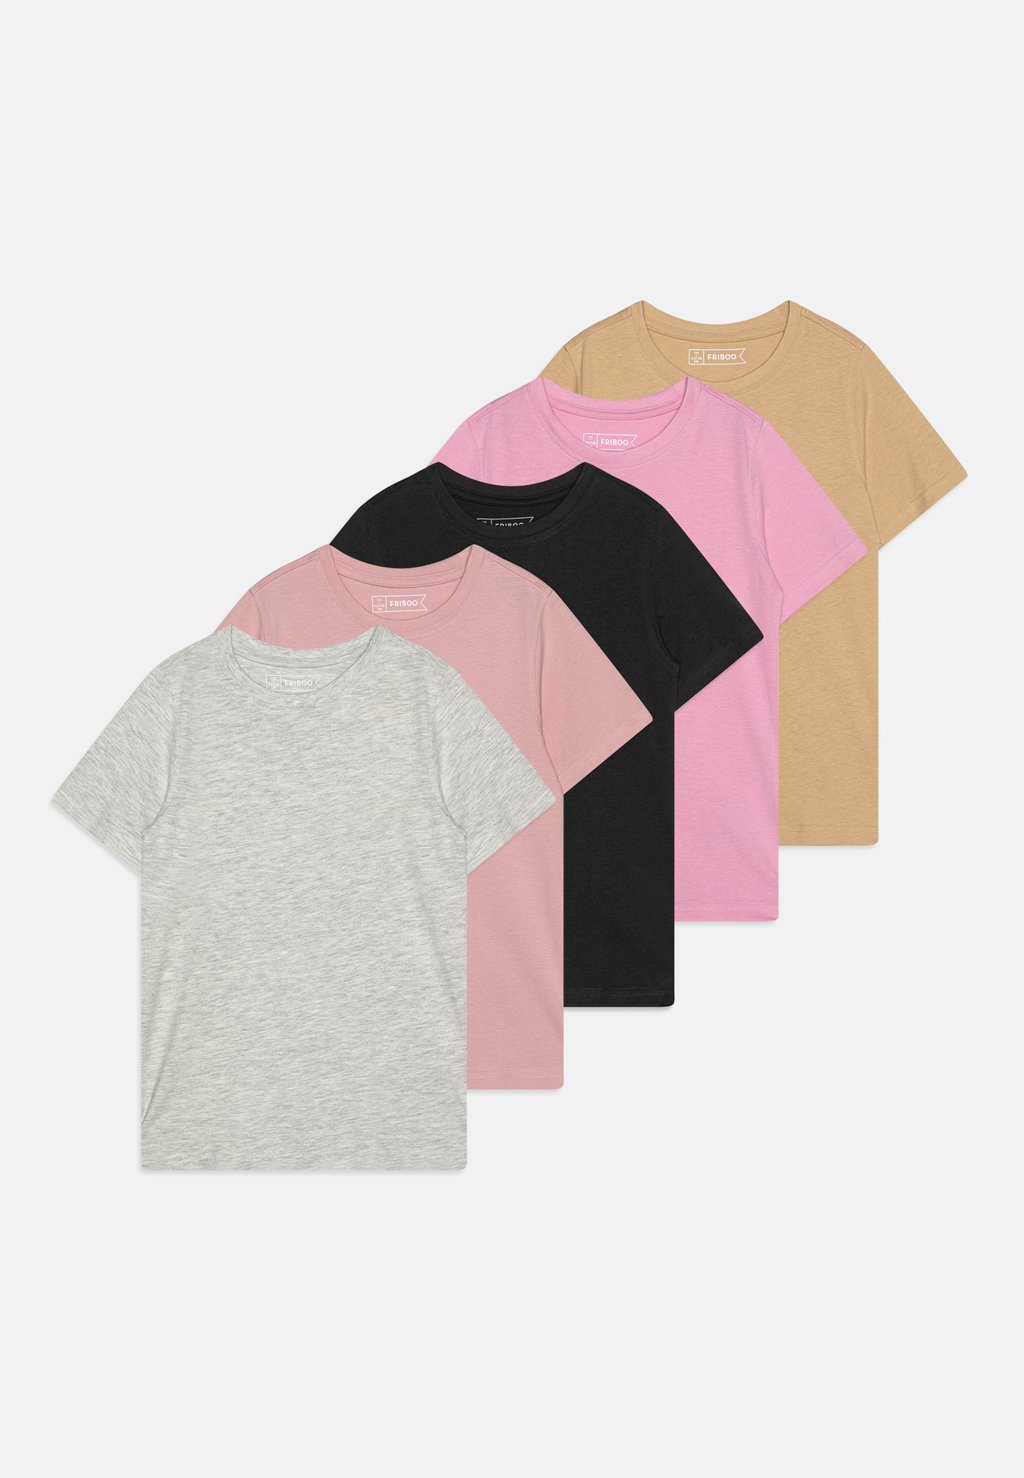 футболка с принтом Unisex 5 Pack Friboo, цвет black/light pink/mottled light grey t9137 light black 200 мл c13t913700